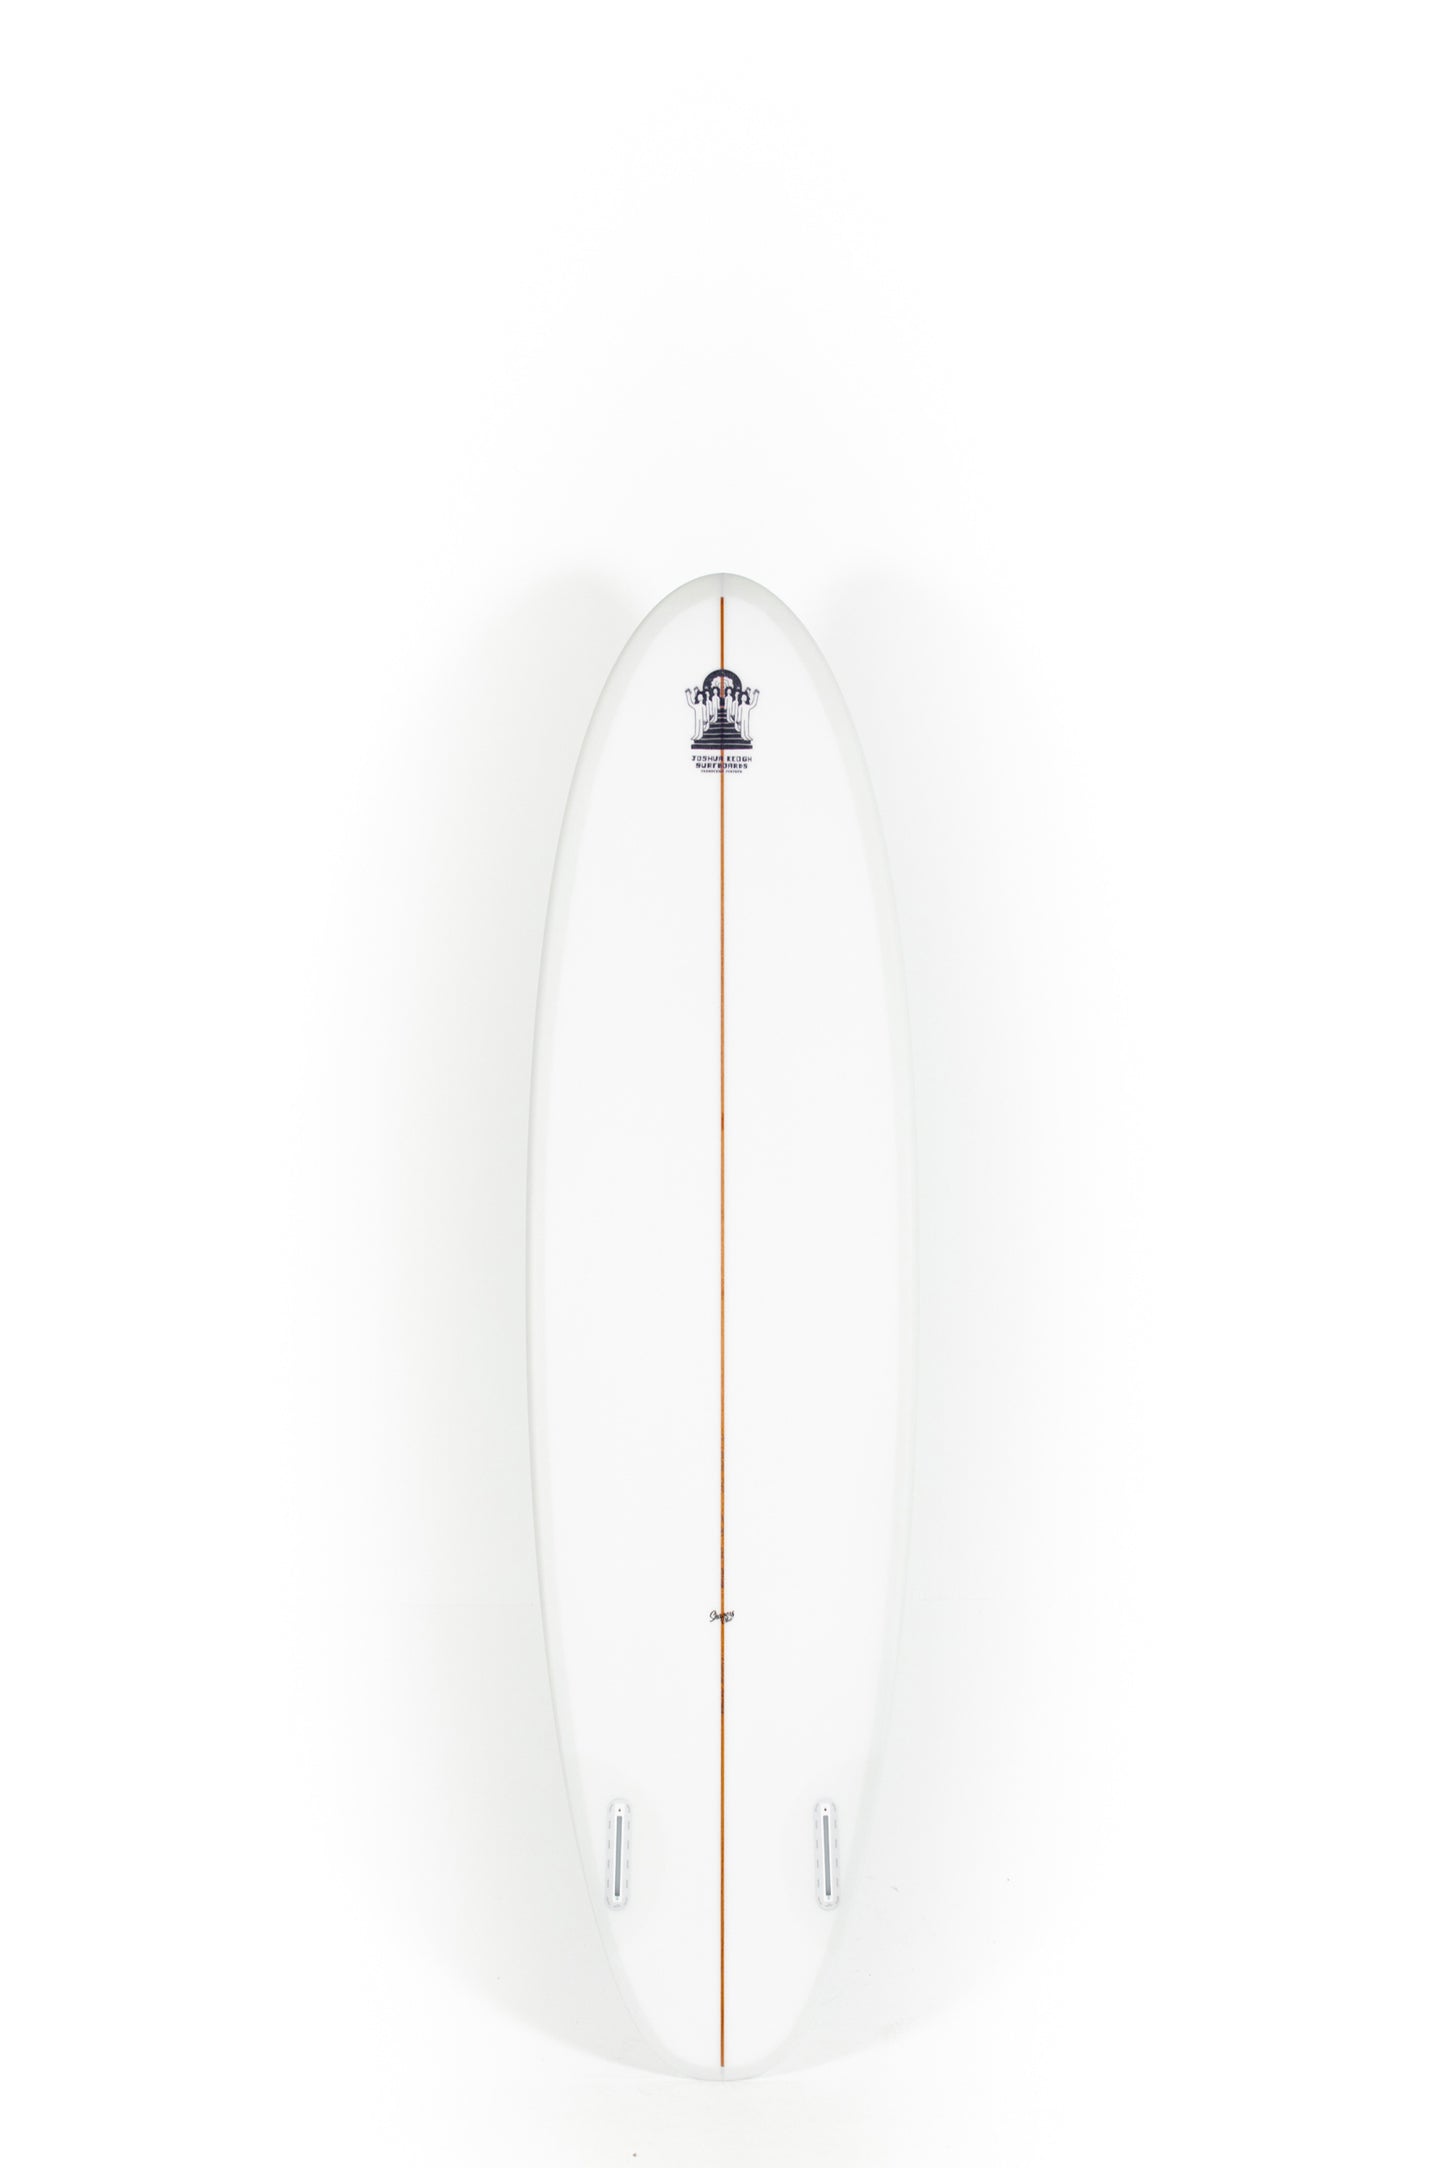 Pukas Surf Shop - Joshua Keogh Surfboard - LIBERATOR TWIN by Joshua Keogh - 6'10" x 21 1/4 x 2 5/8 - LIBERATOR610